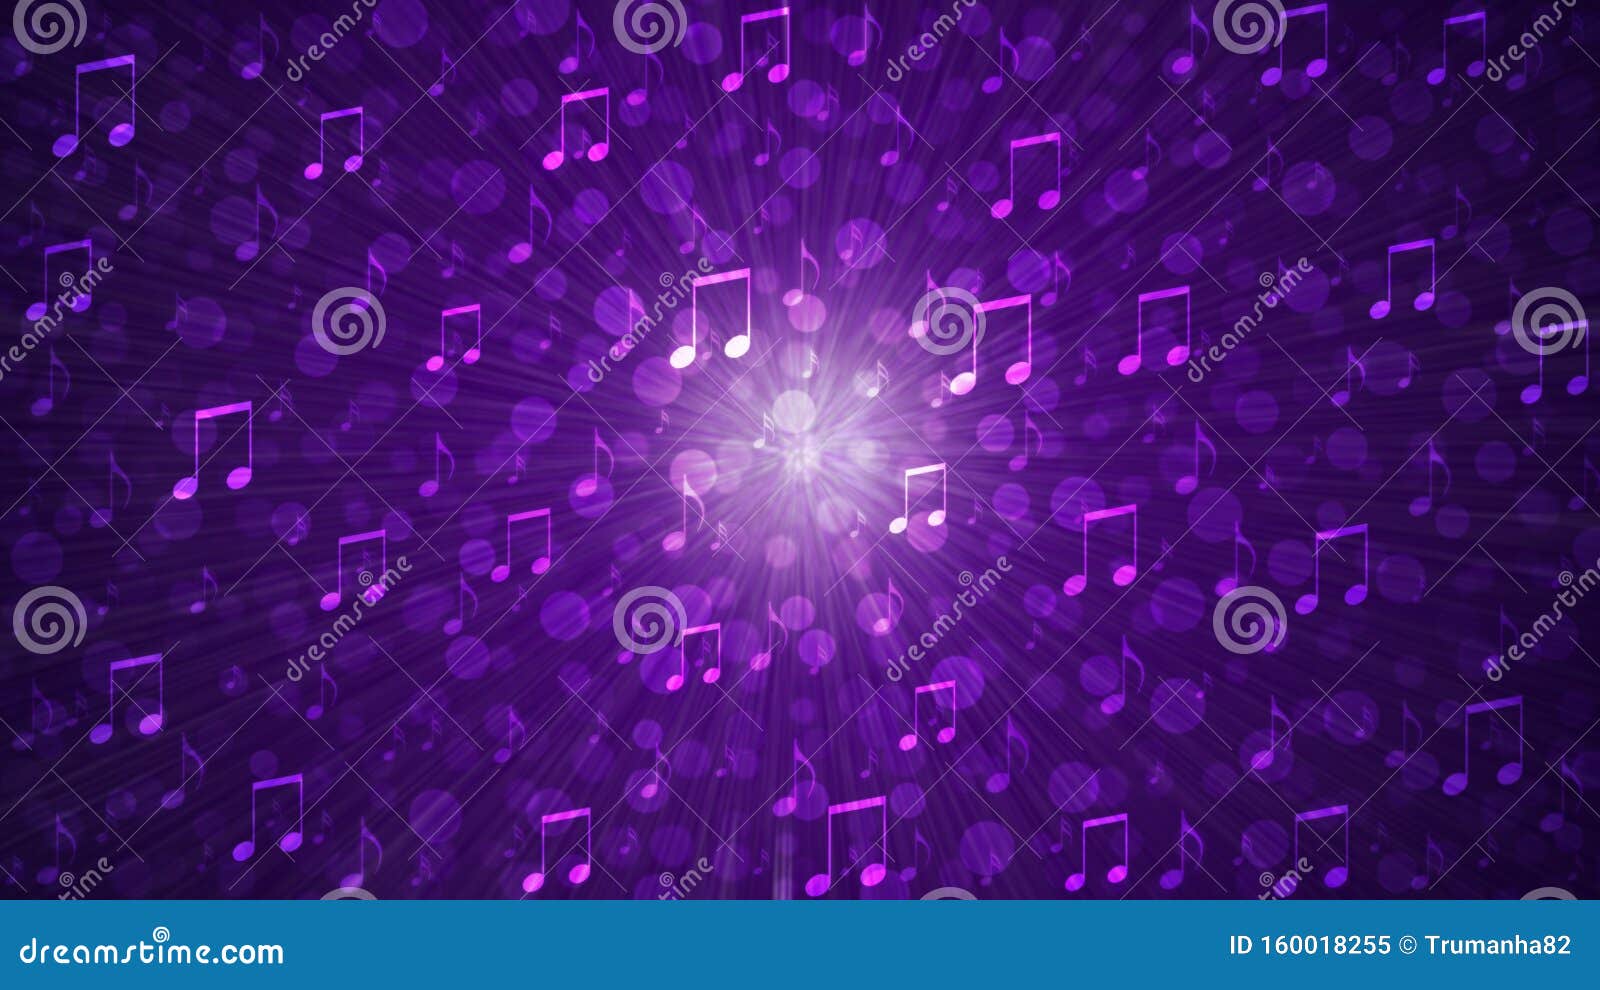 abstract music notes blast in blurry dark purple background